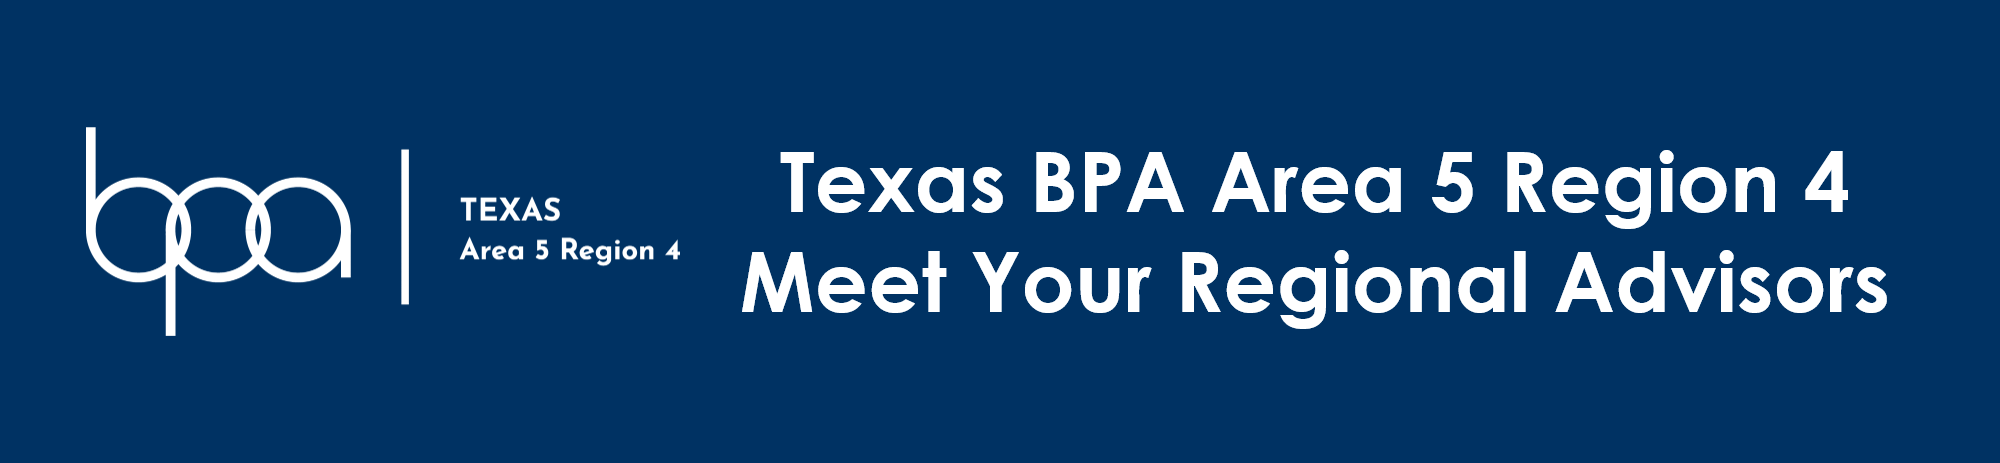 Texas BPA Area 5 Region 4, Meet Your Regional Advisors